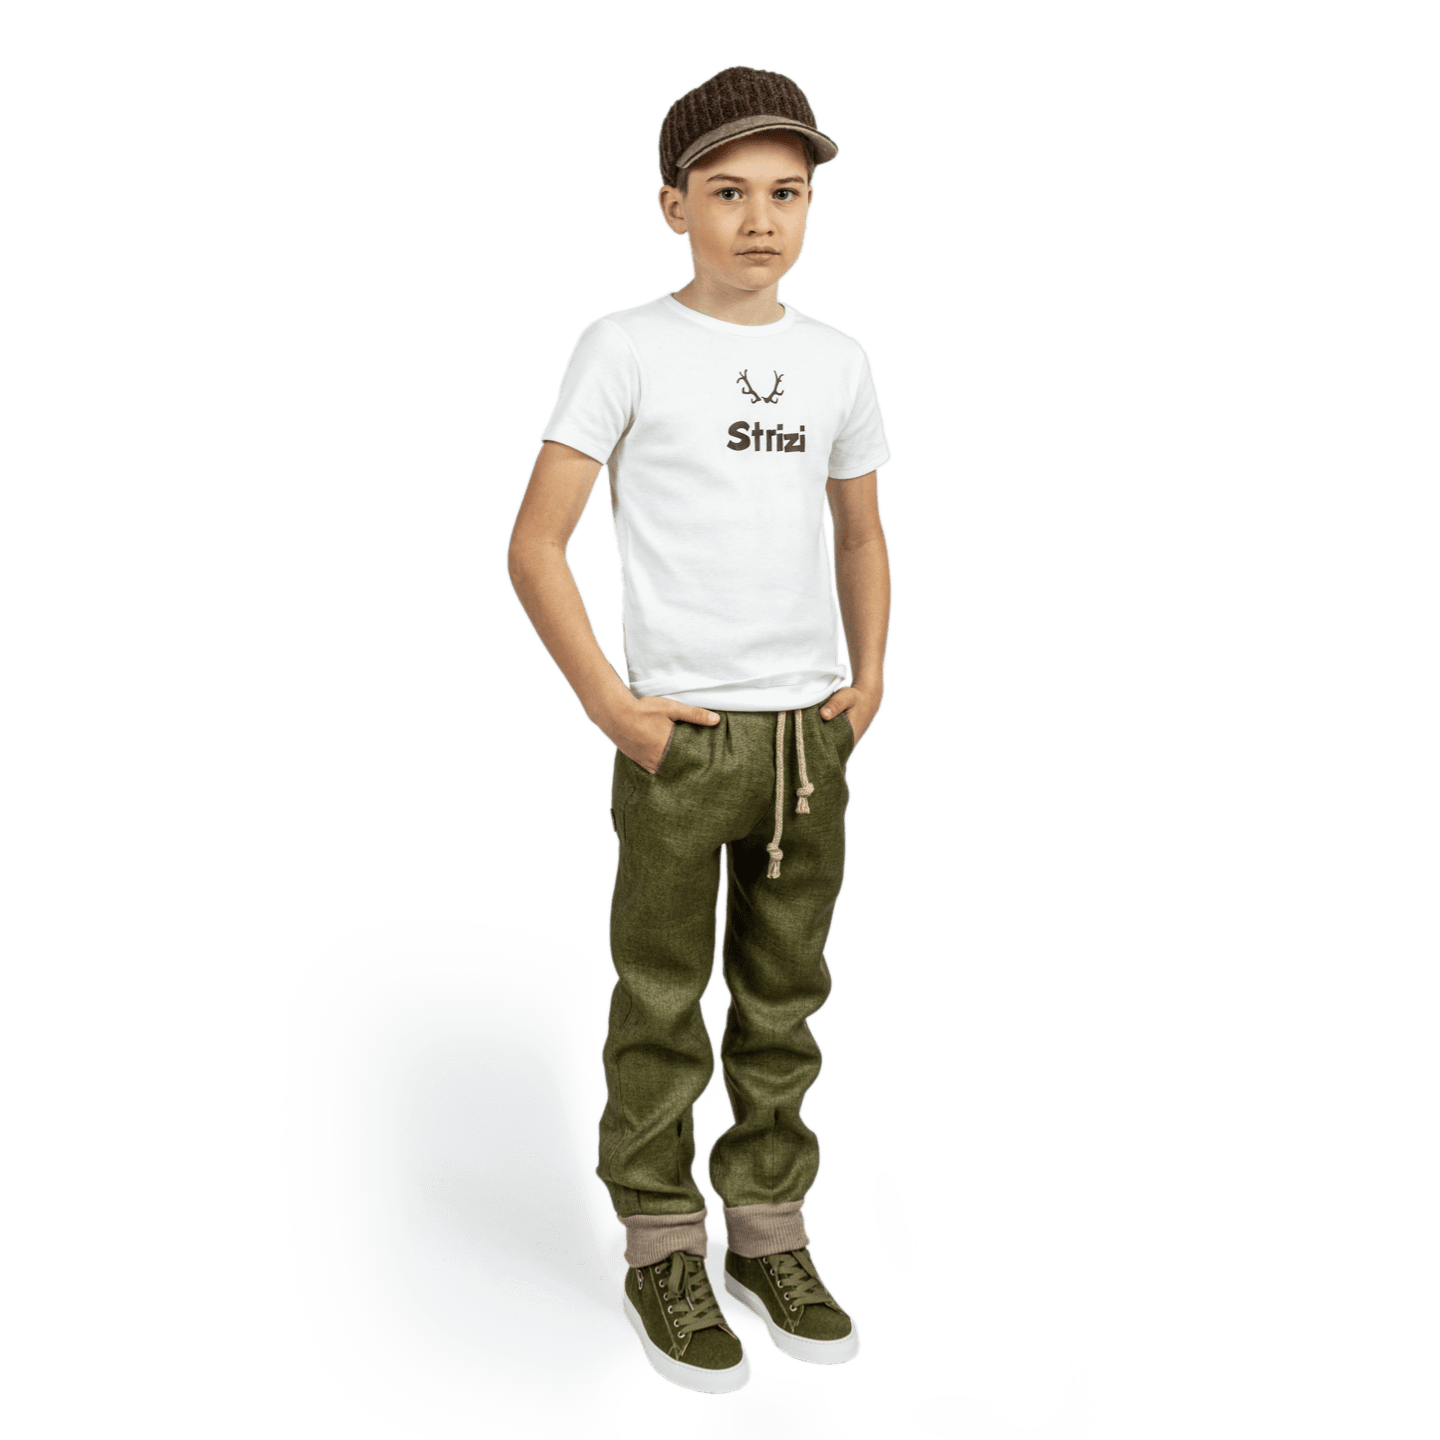 Strizi Kinder Striz Shirt weiss 1 - Strizi Children‘s Strizi T-Shirt white